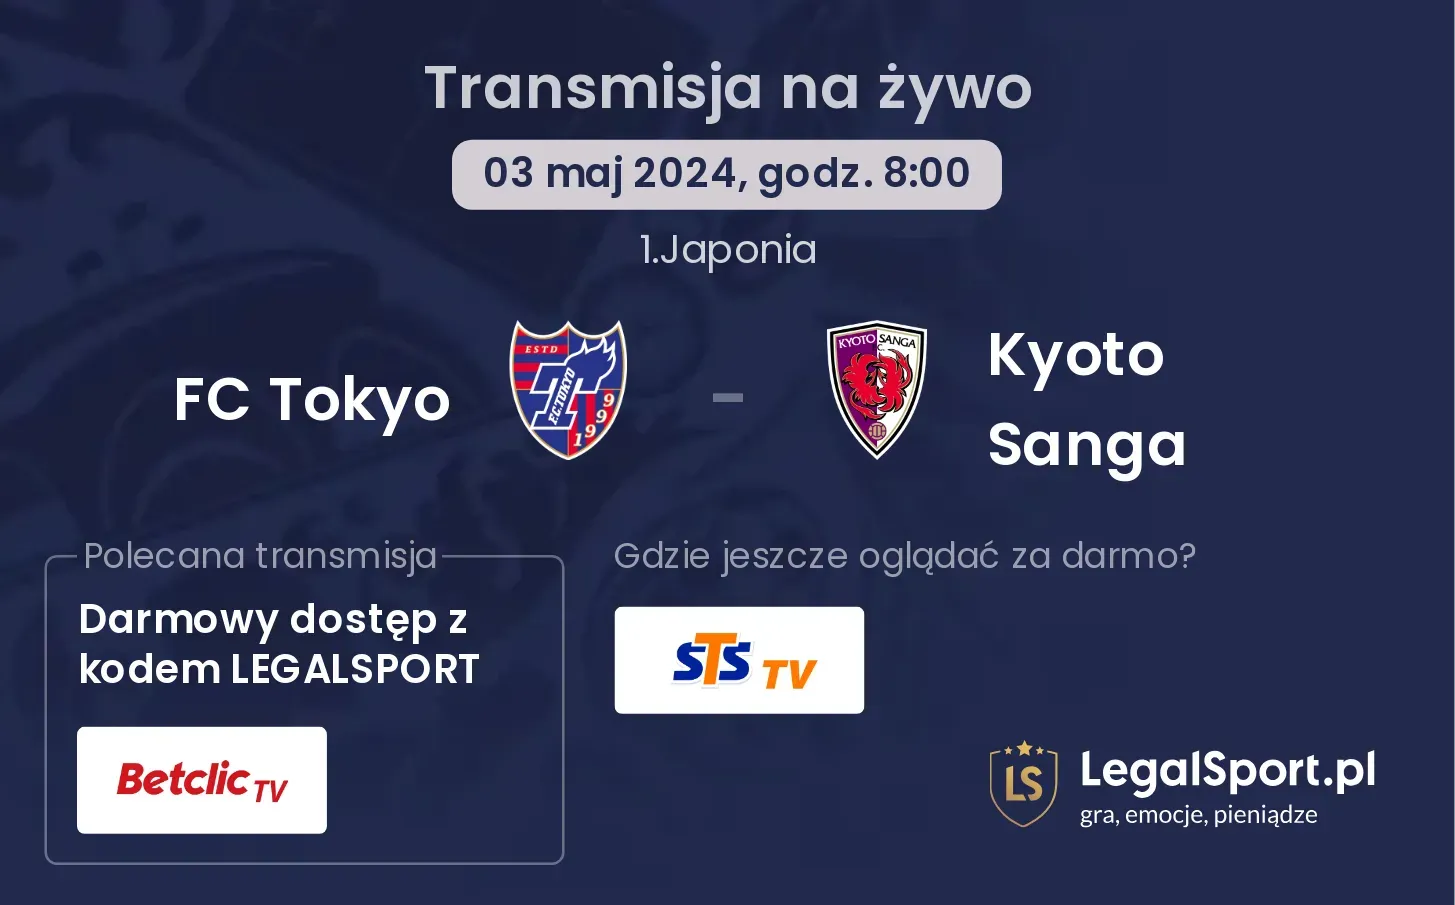 FC Tokyo - Kyoto Sanga transmisja na żywo